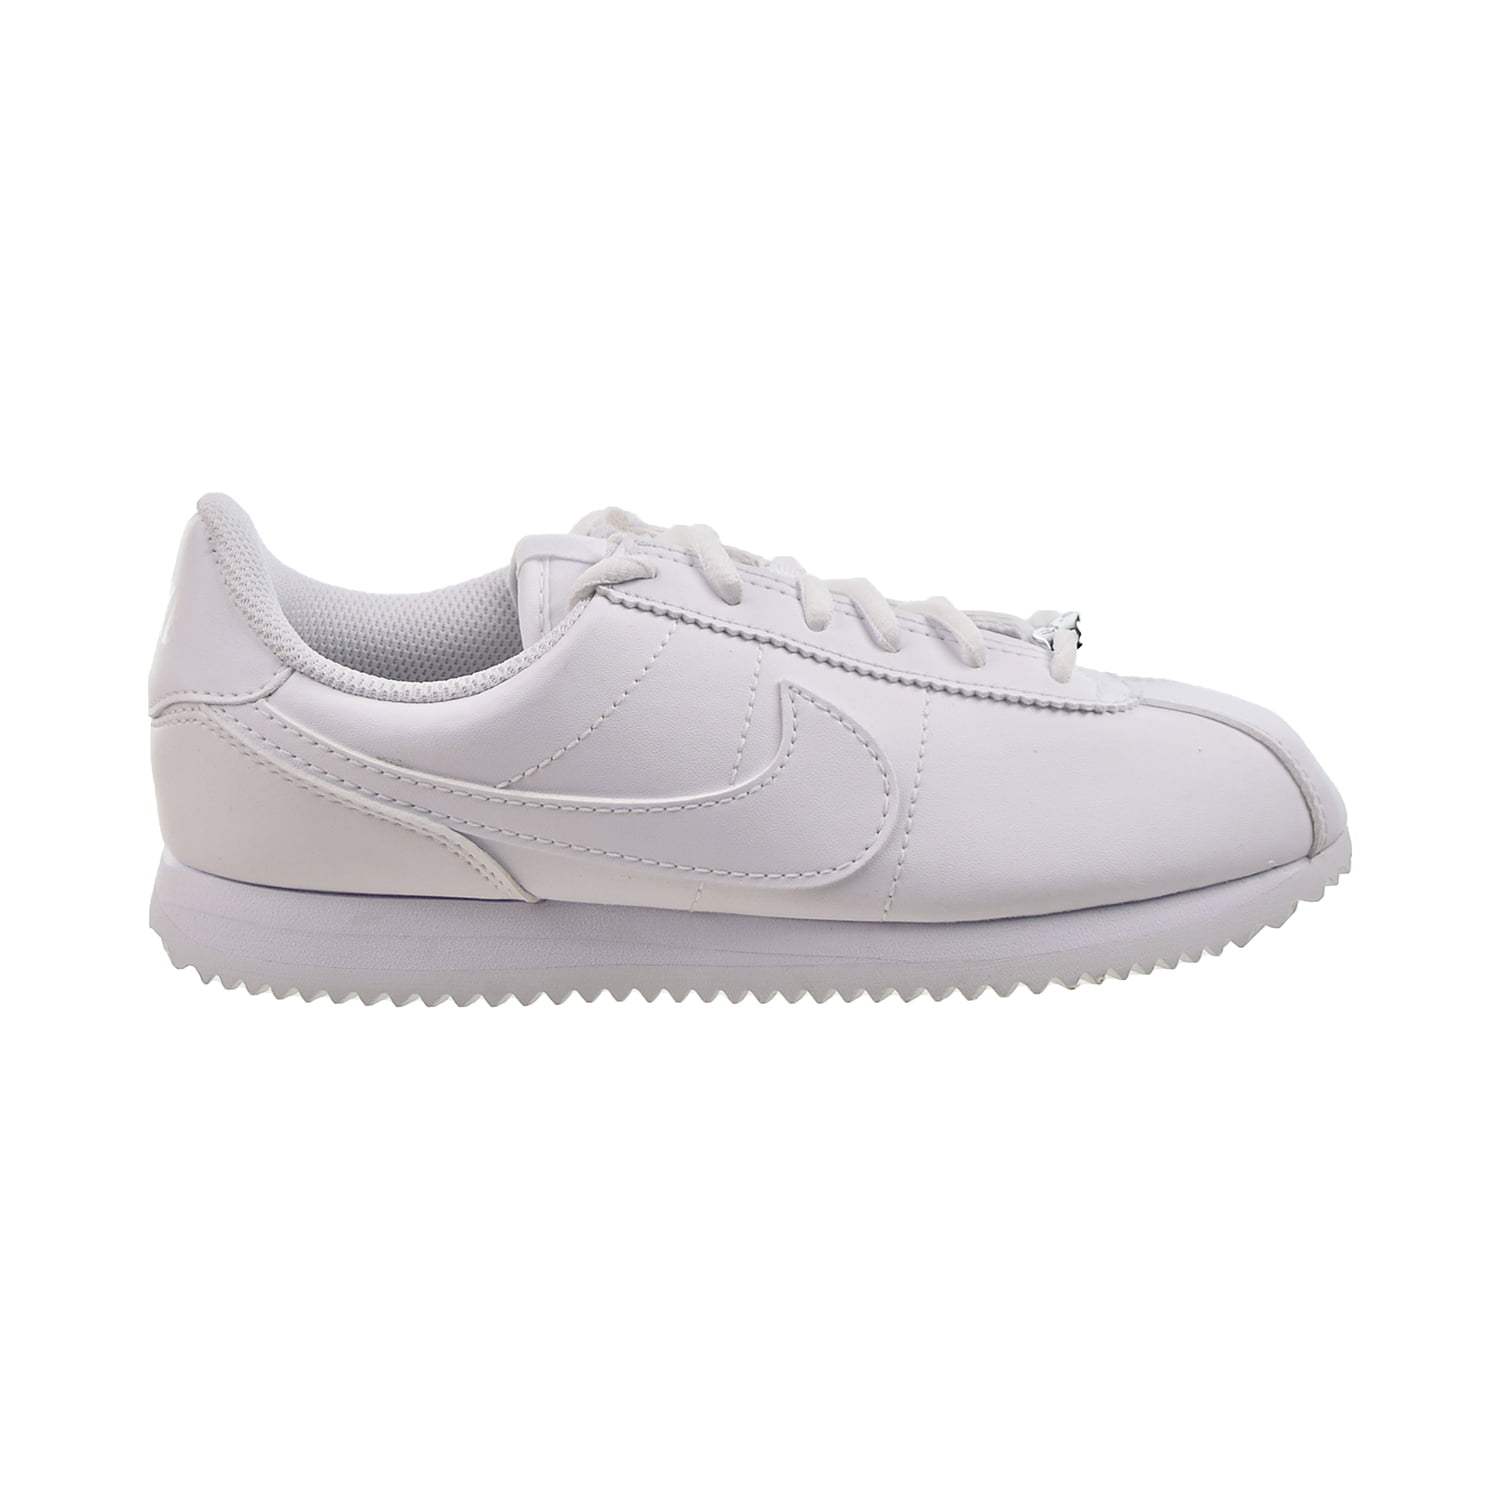 optioneel kleurstof Klusjesman Nike Cortez Basic Leather "Triple White" (GS) Big Kids' Shoes White  904764-100 - Walmart.com